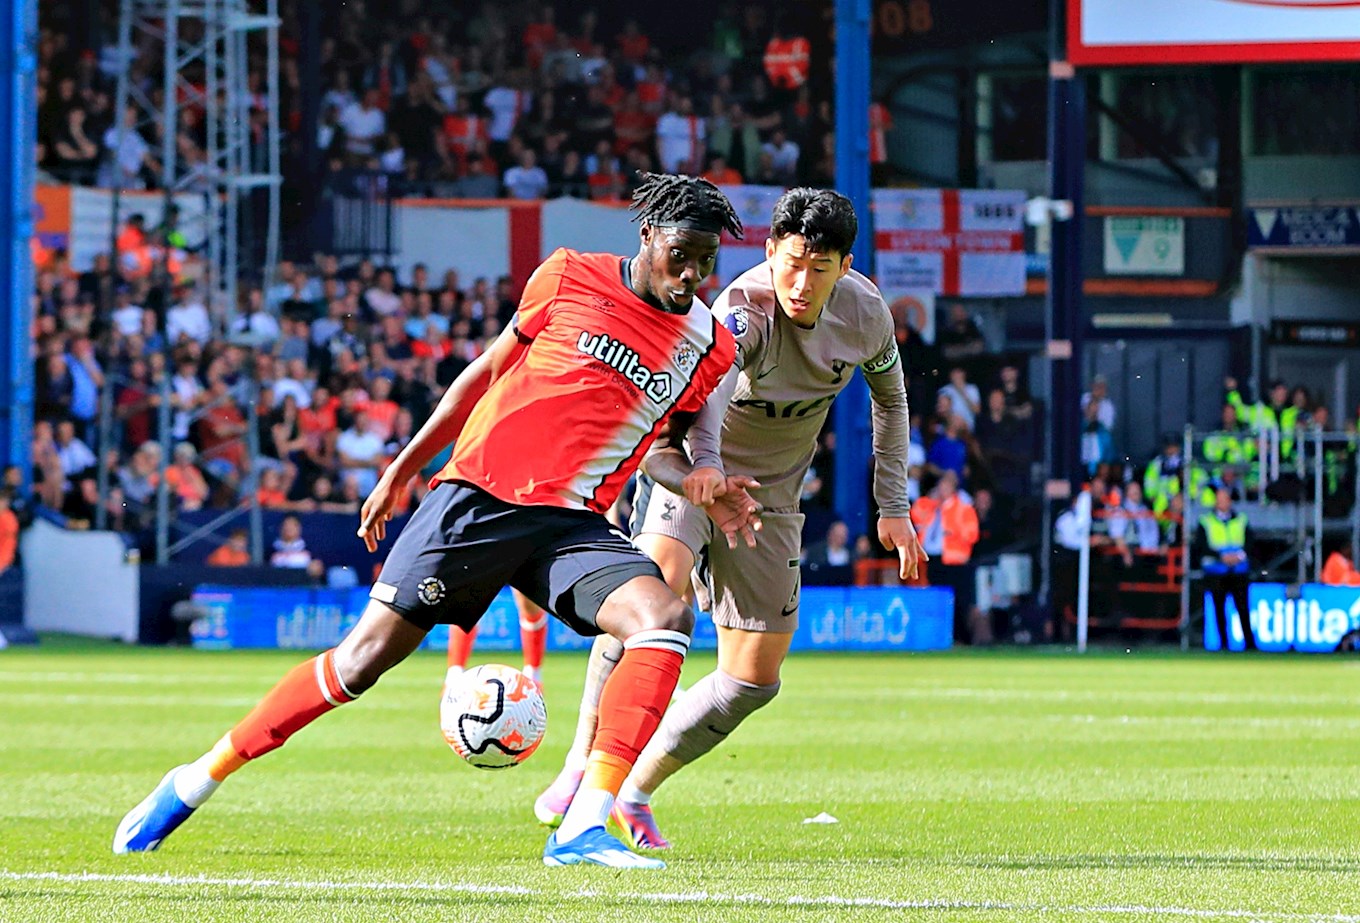 Hatters striker Elijah Adebayo in action against Tottenham captain Son Heung-Min